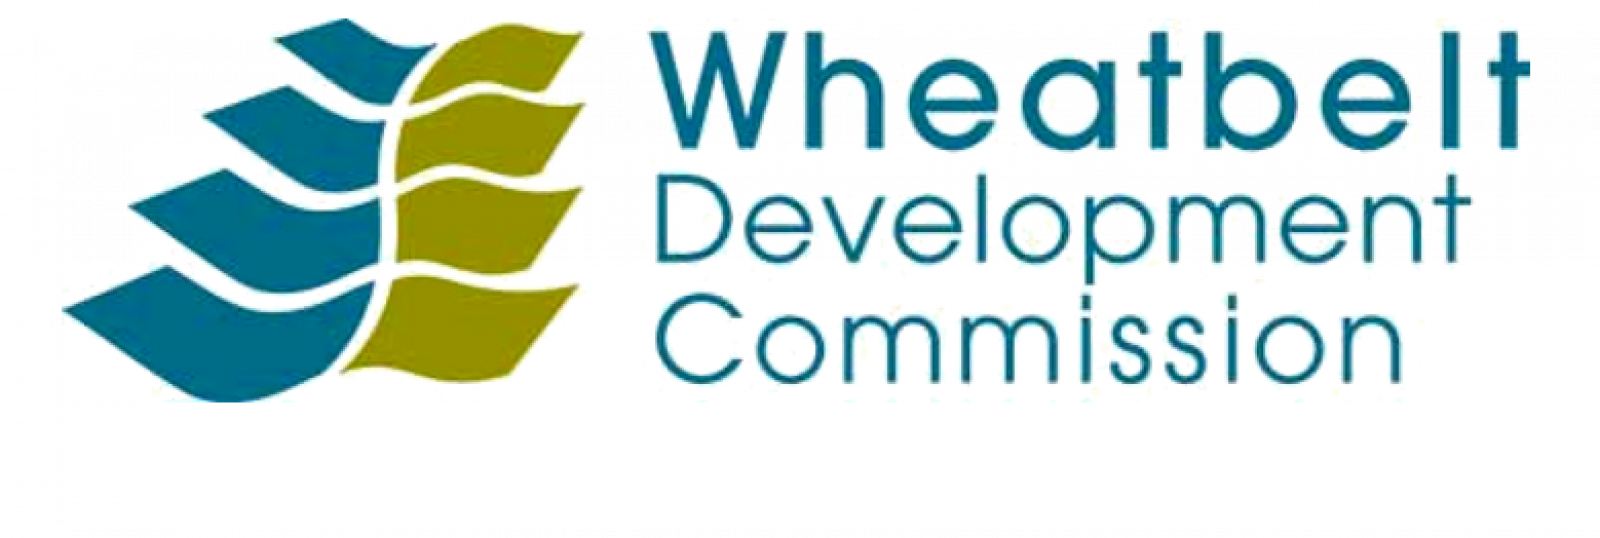 Wheatbelt development commission